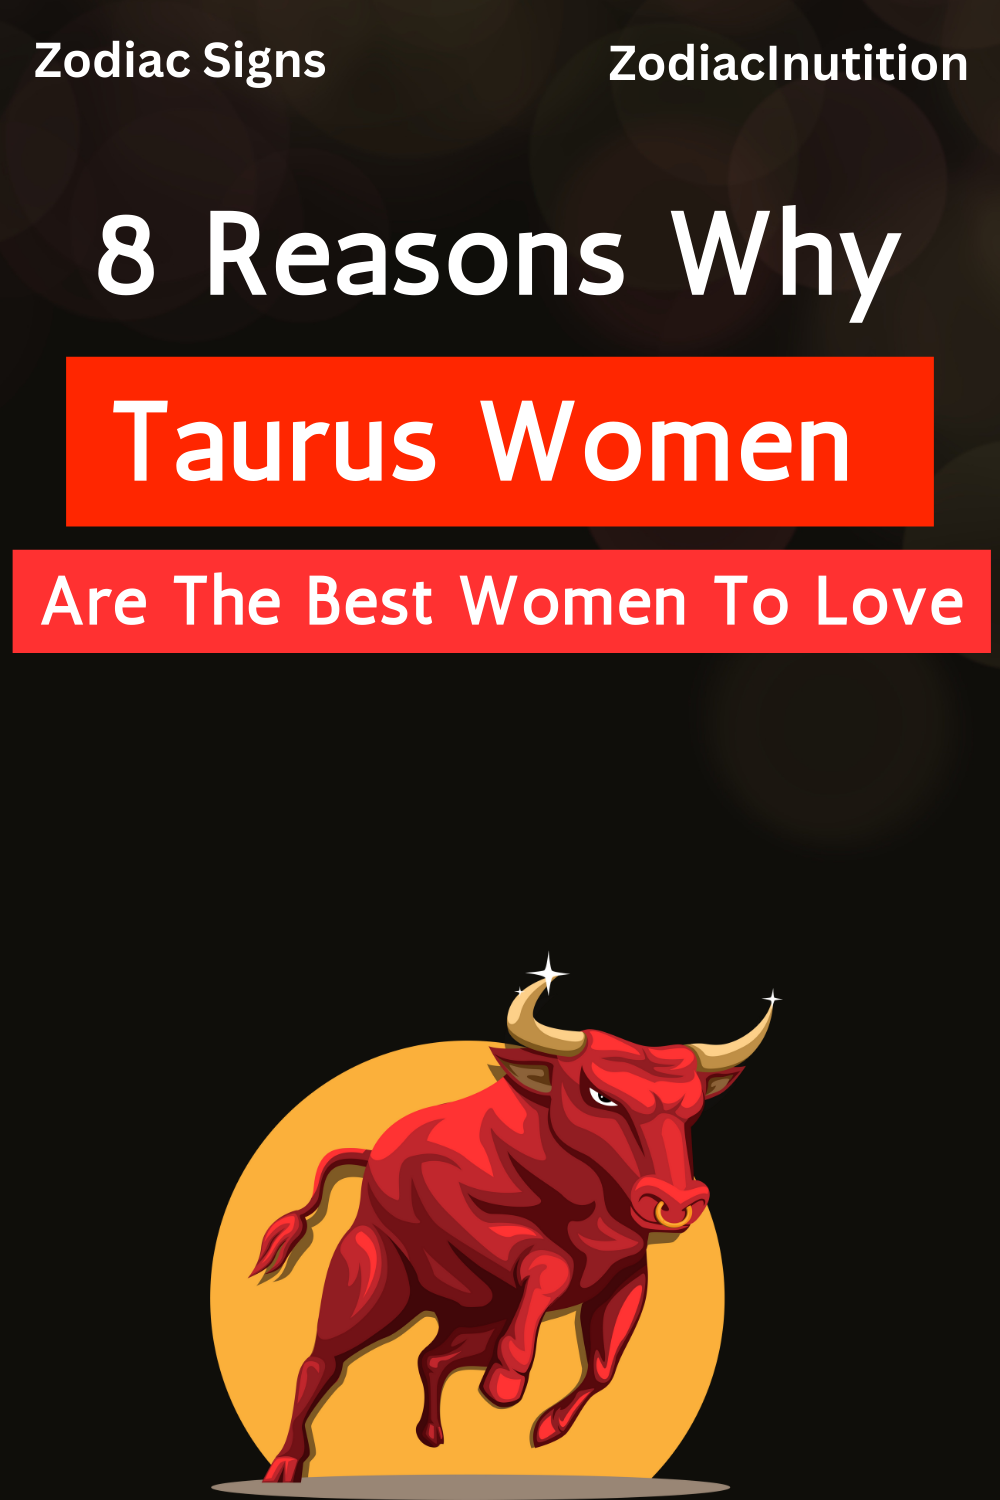 8 Reasons Why Taurus Women Are The Best Women To Love